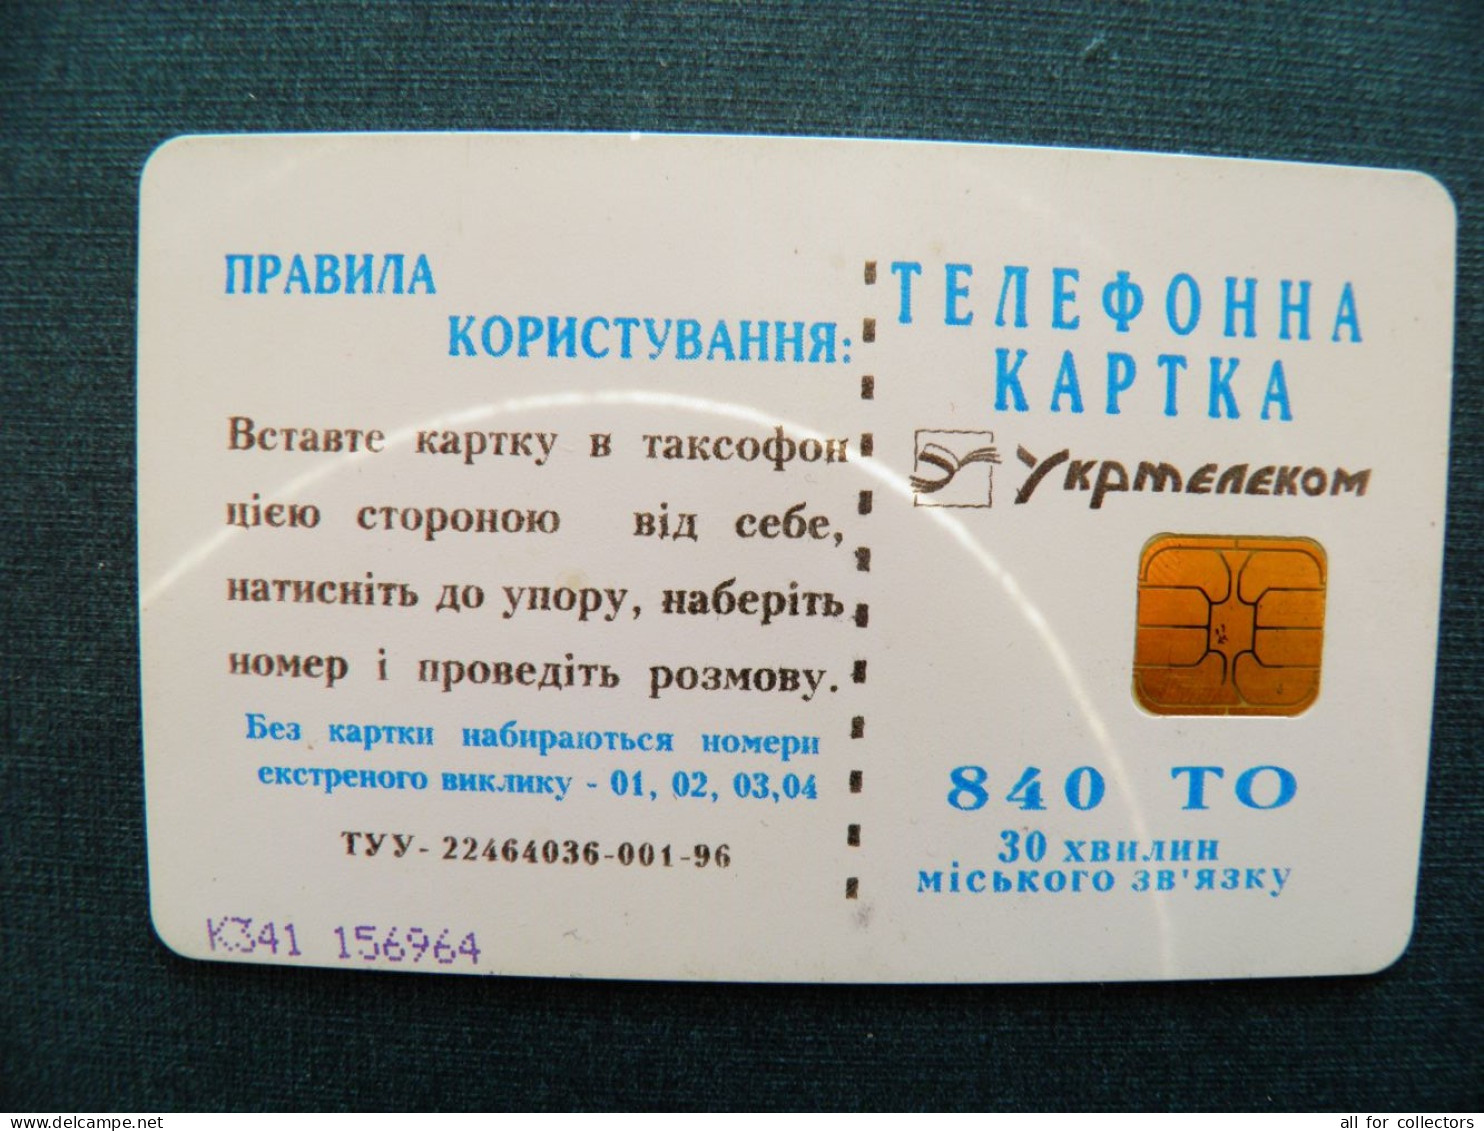 Phonecard Chip Advertising Relcom Internet K341 840 Units UKRAINE - Ukraine